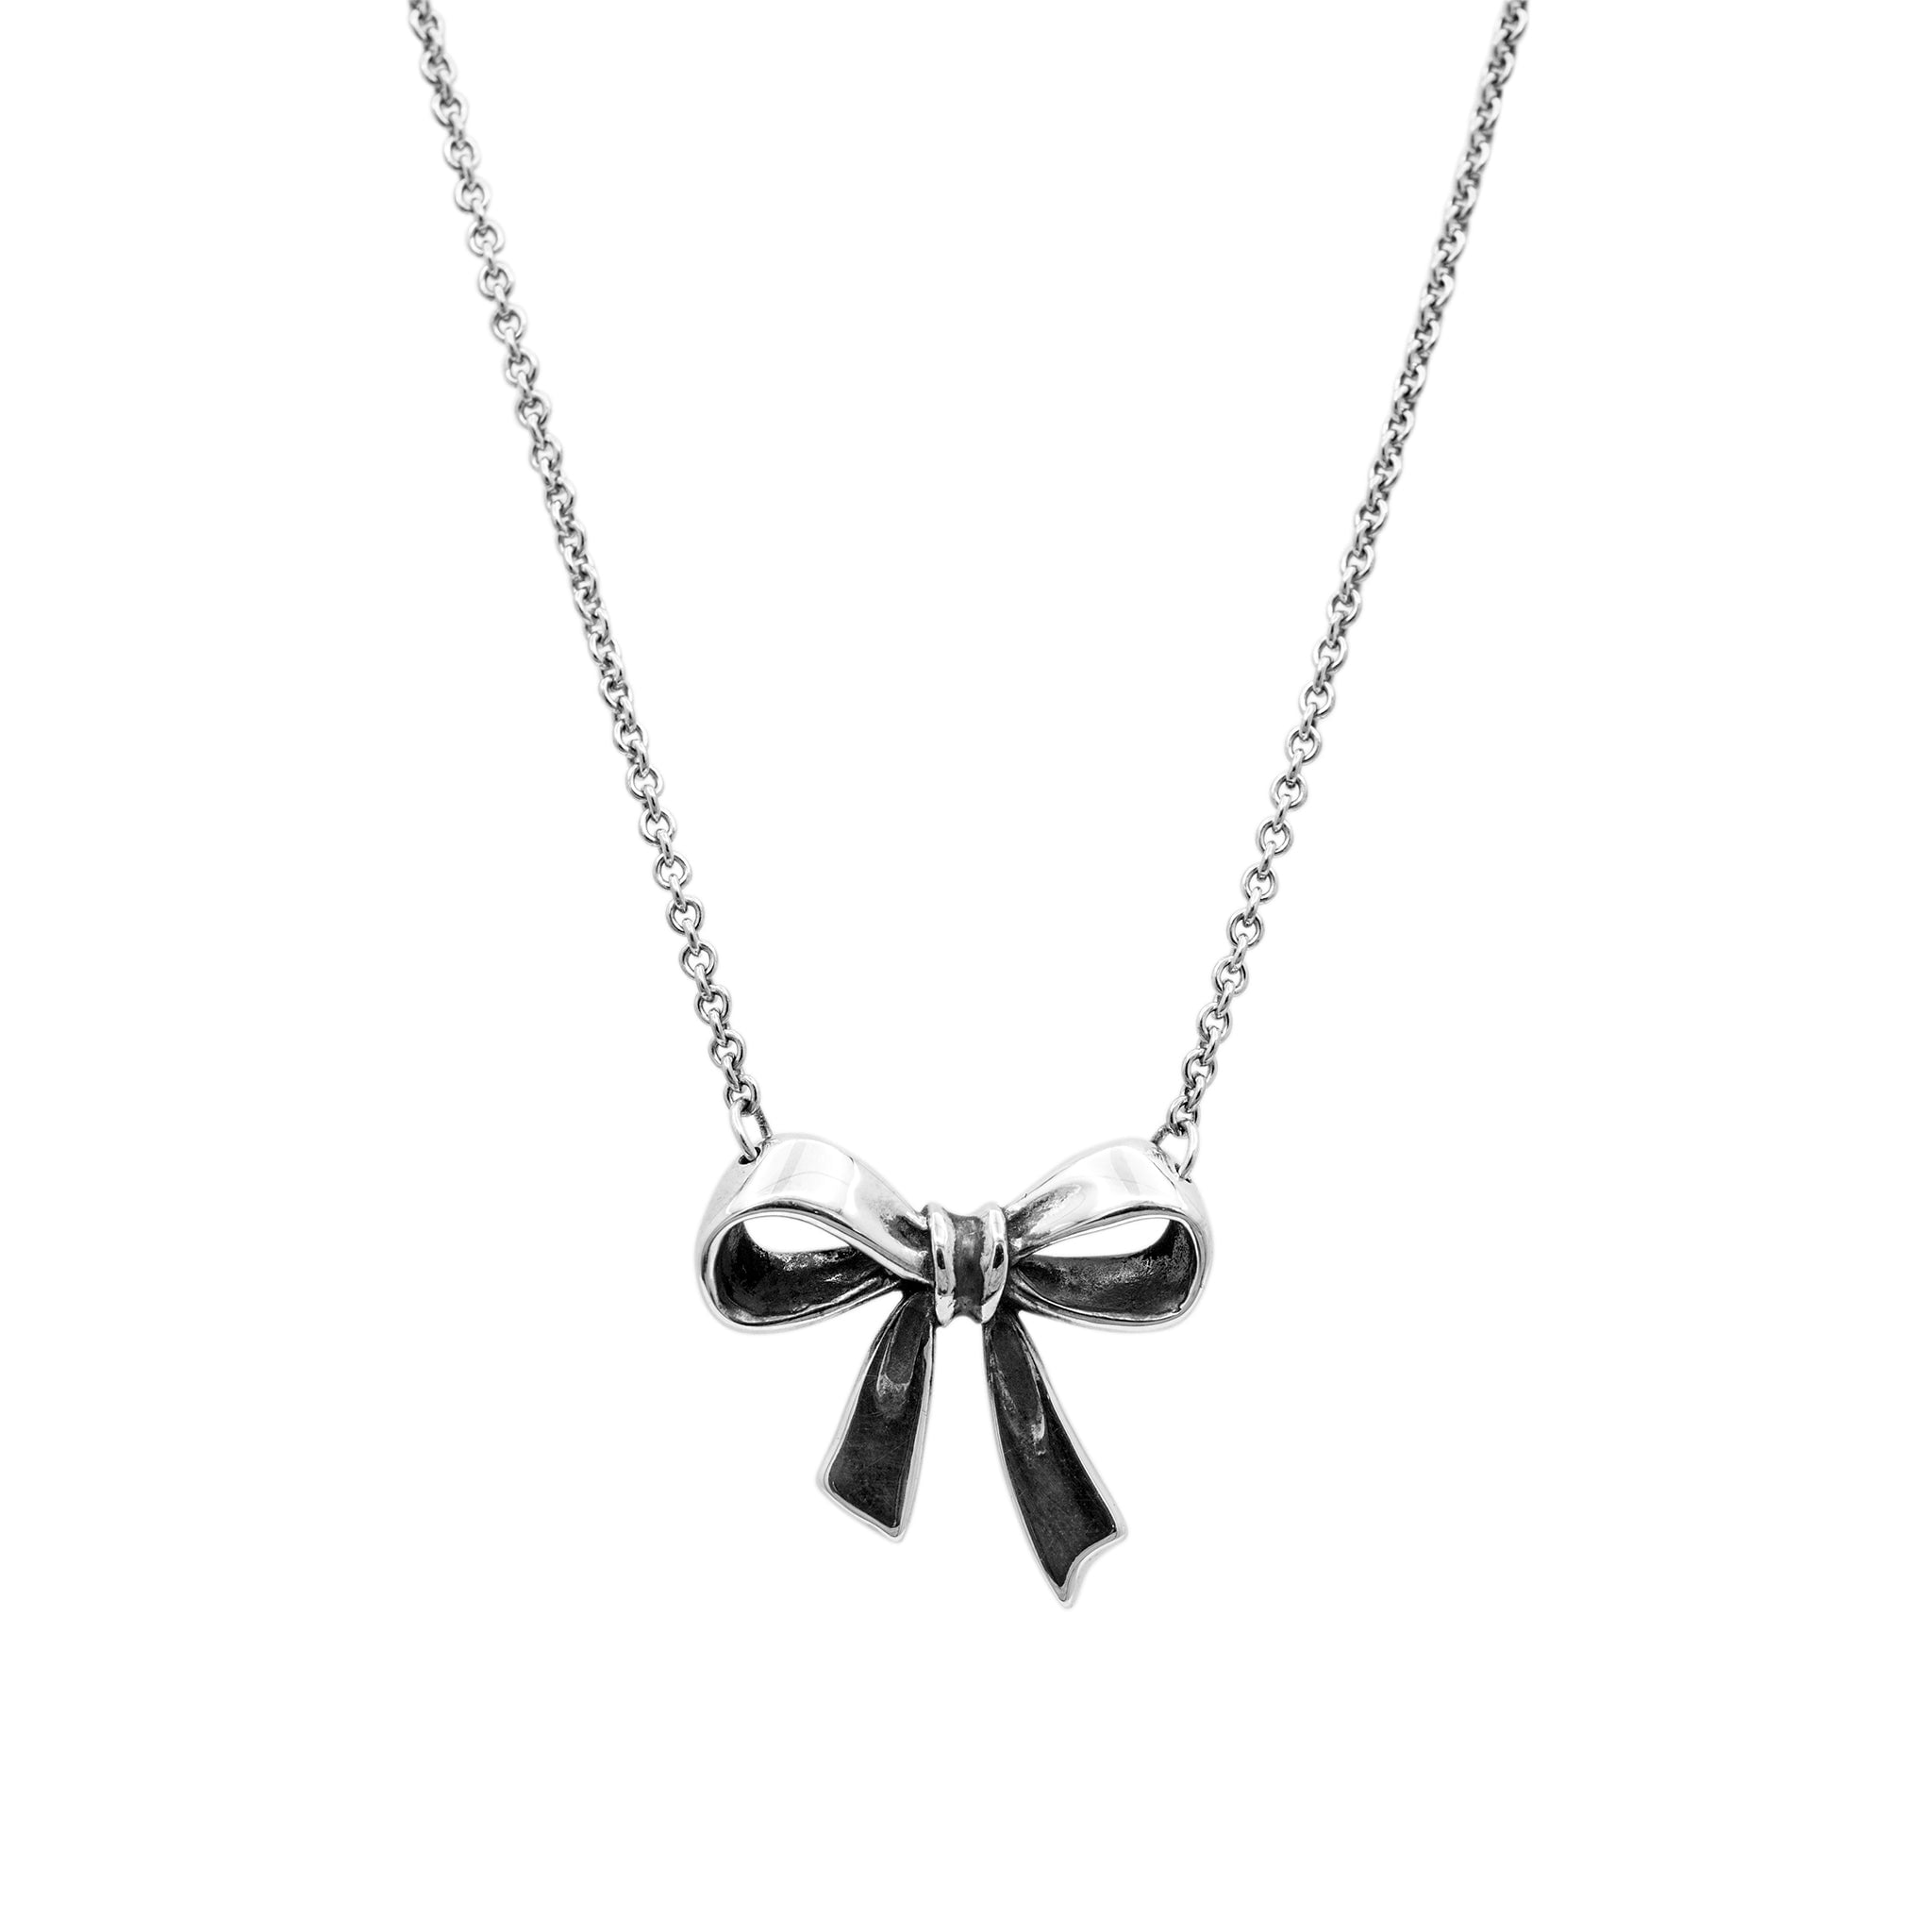 James avery sterling silver eternal ribbon cross pendant necklace - Jewelry